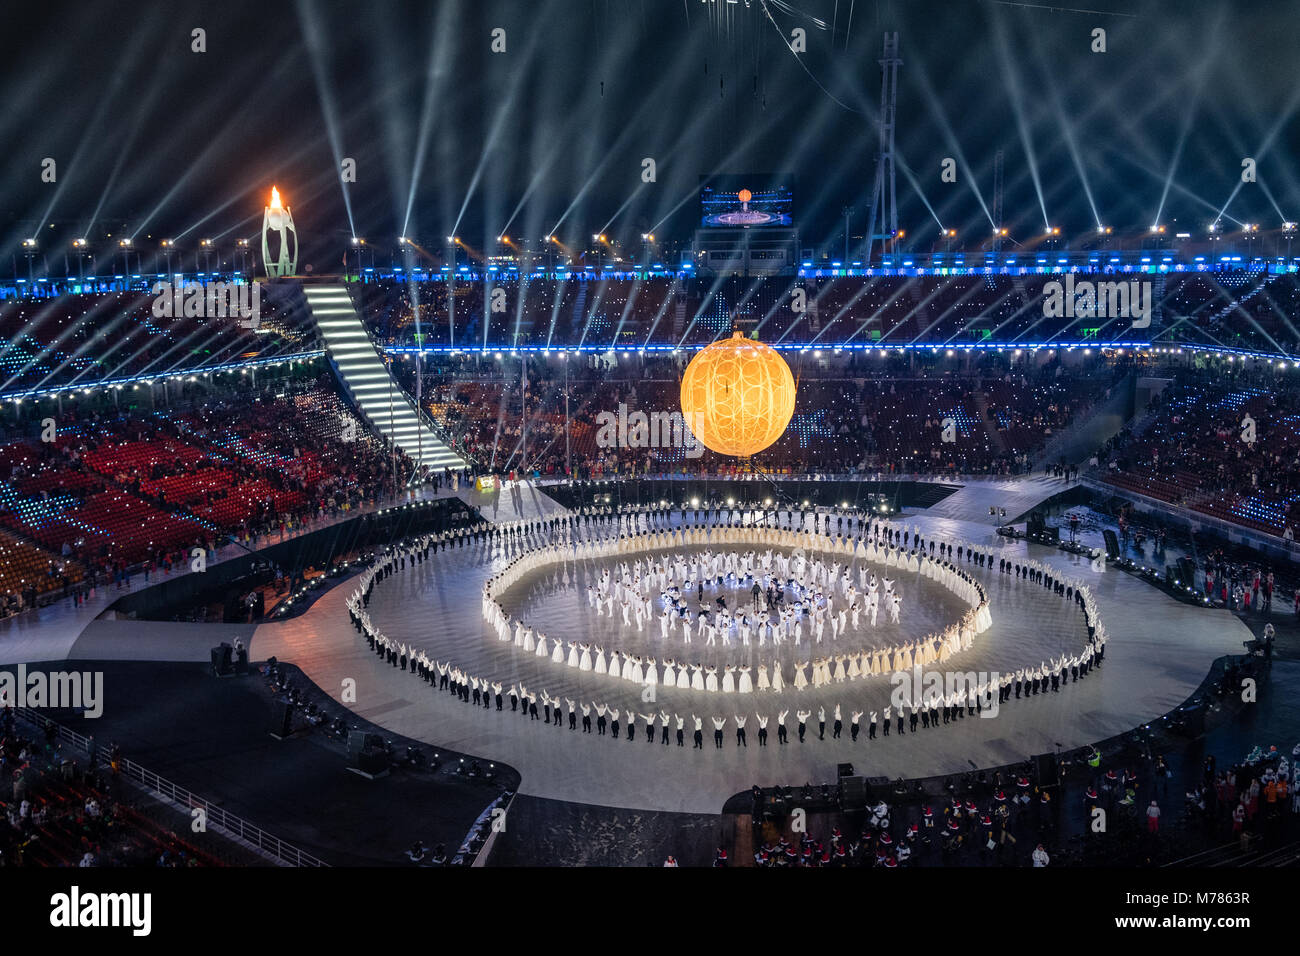 OLYMPICS 2018 PHOTO 4X6 Opening Ceremony Tiger PyeongChang Winter Sports 